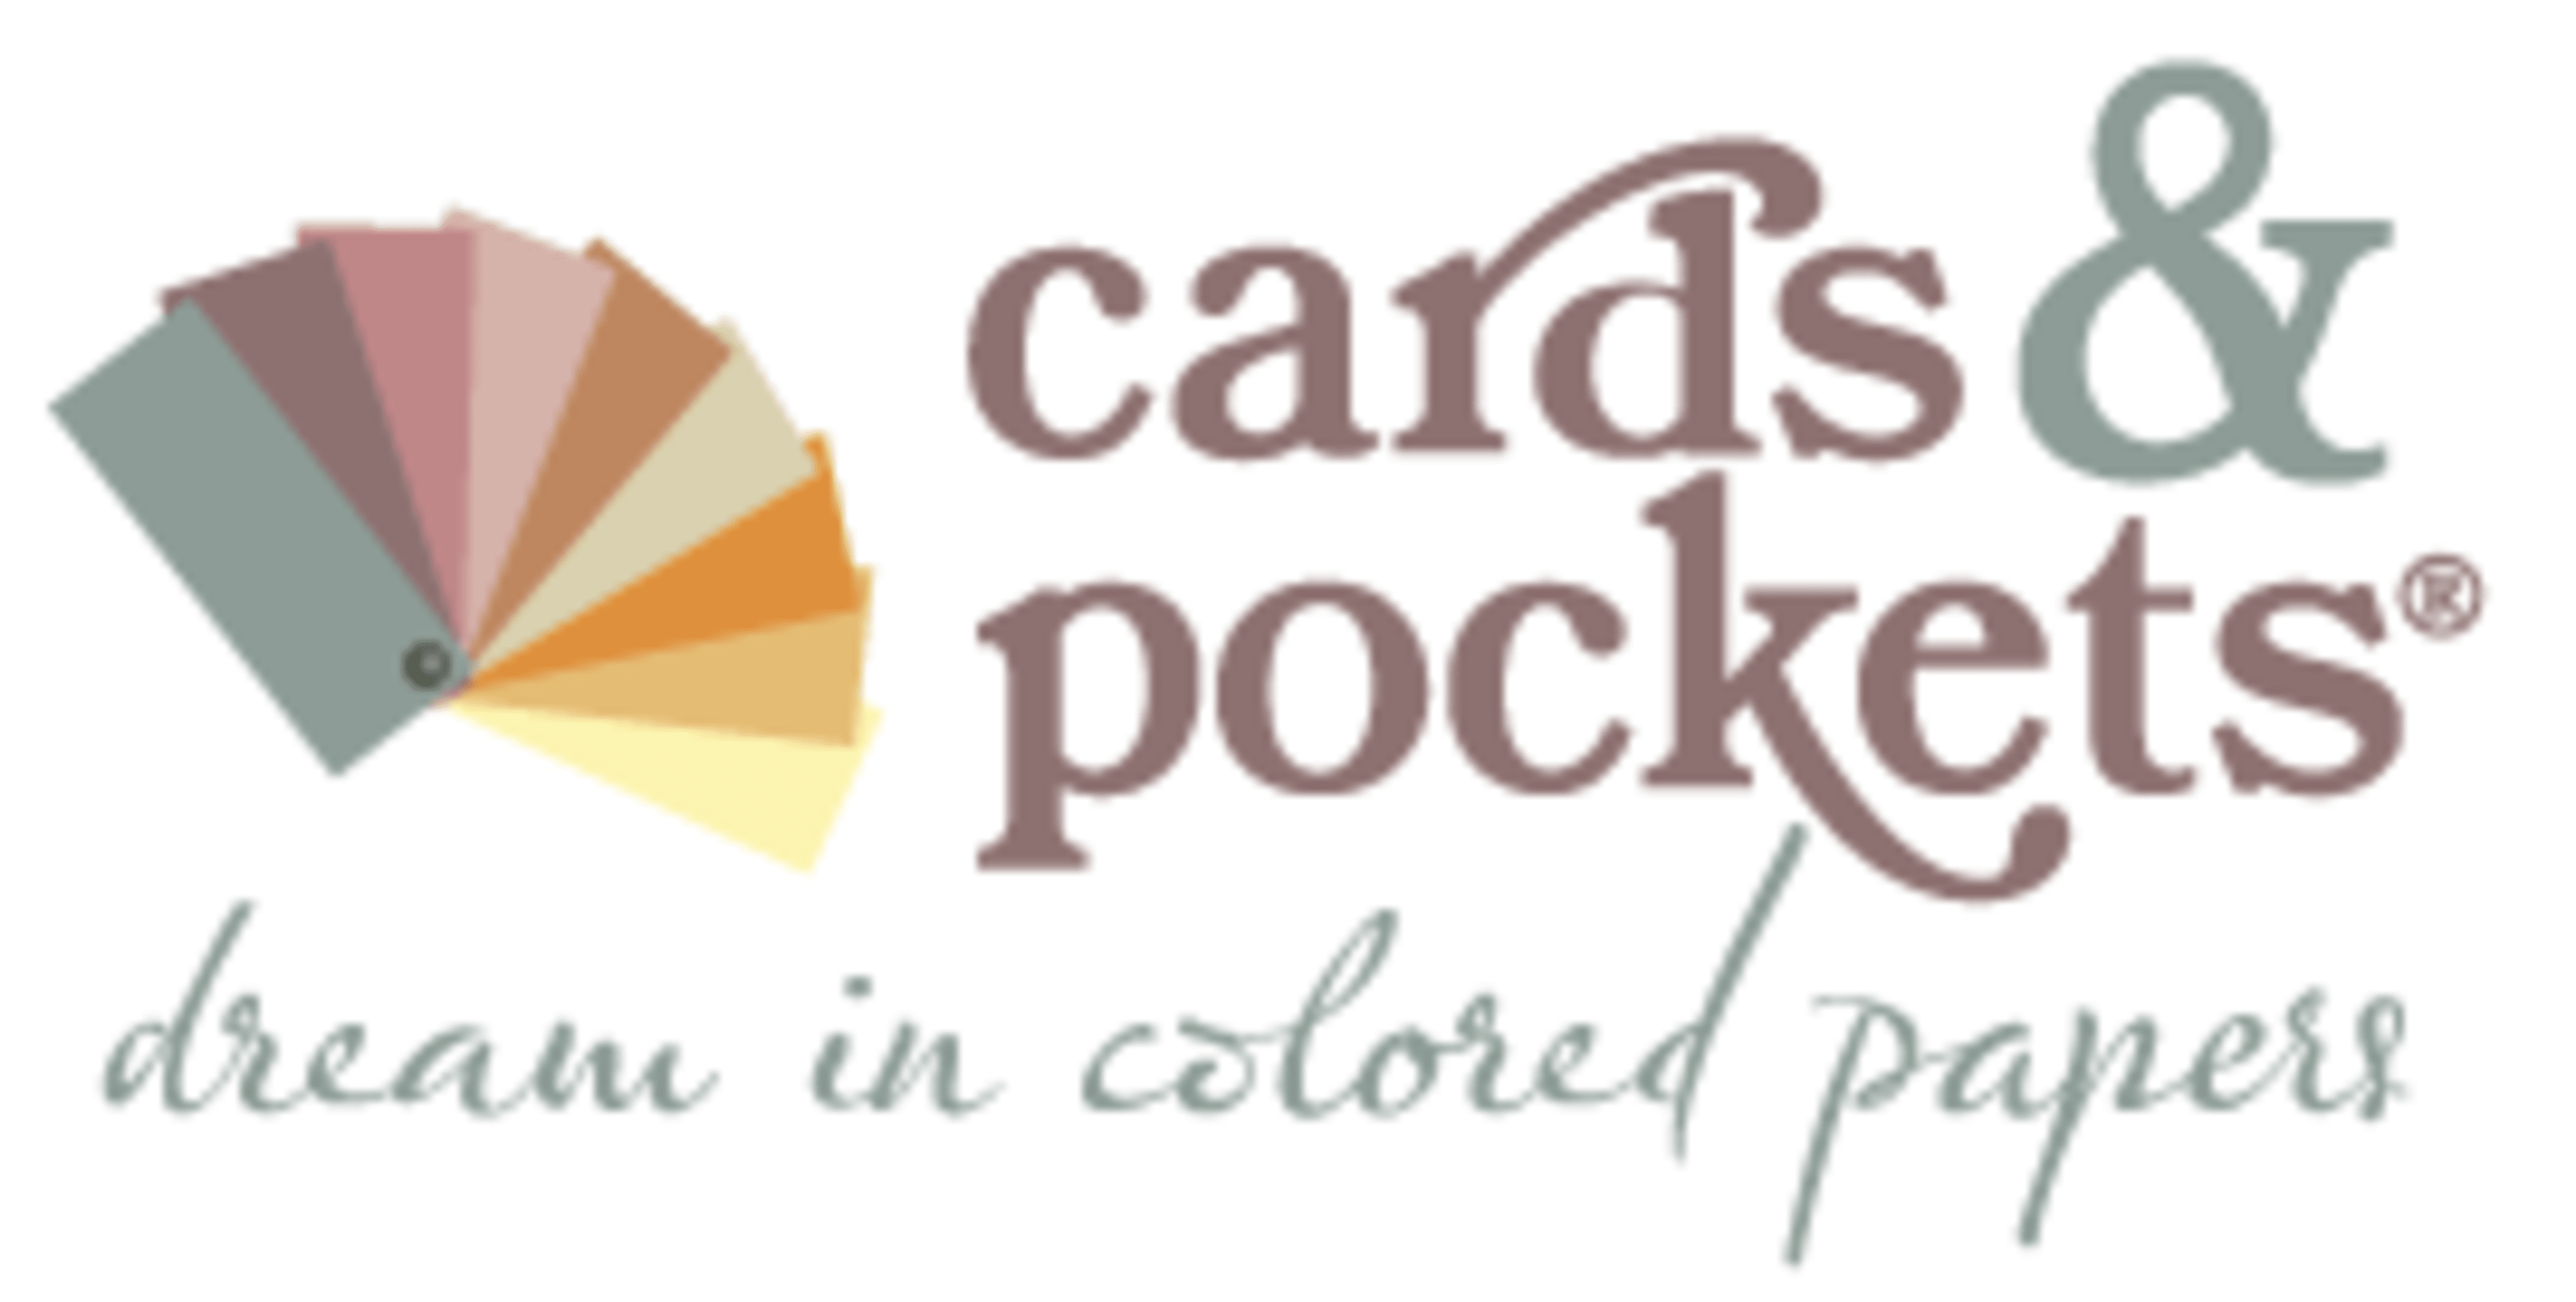 Cards & PocketsCode